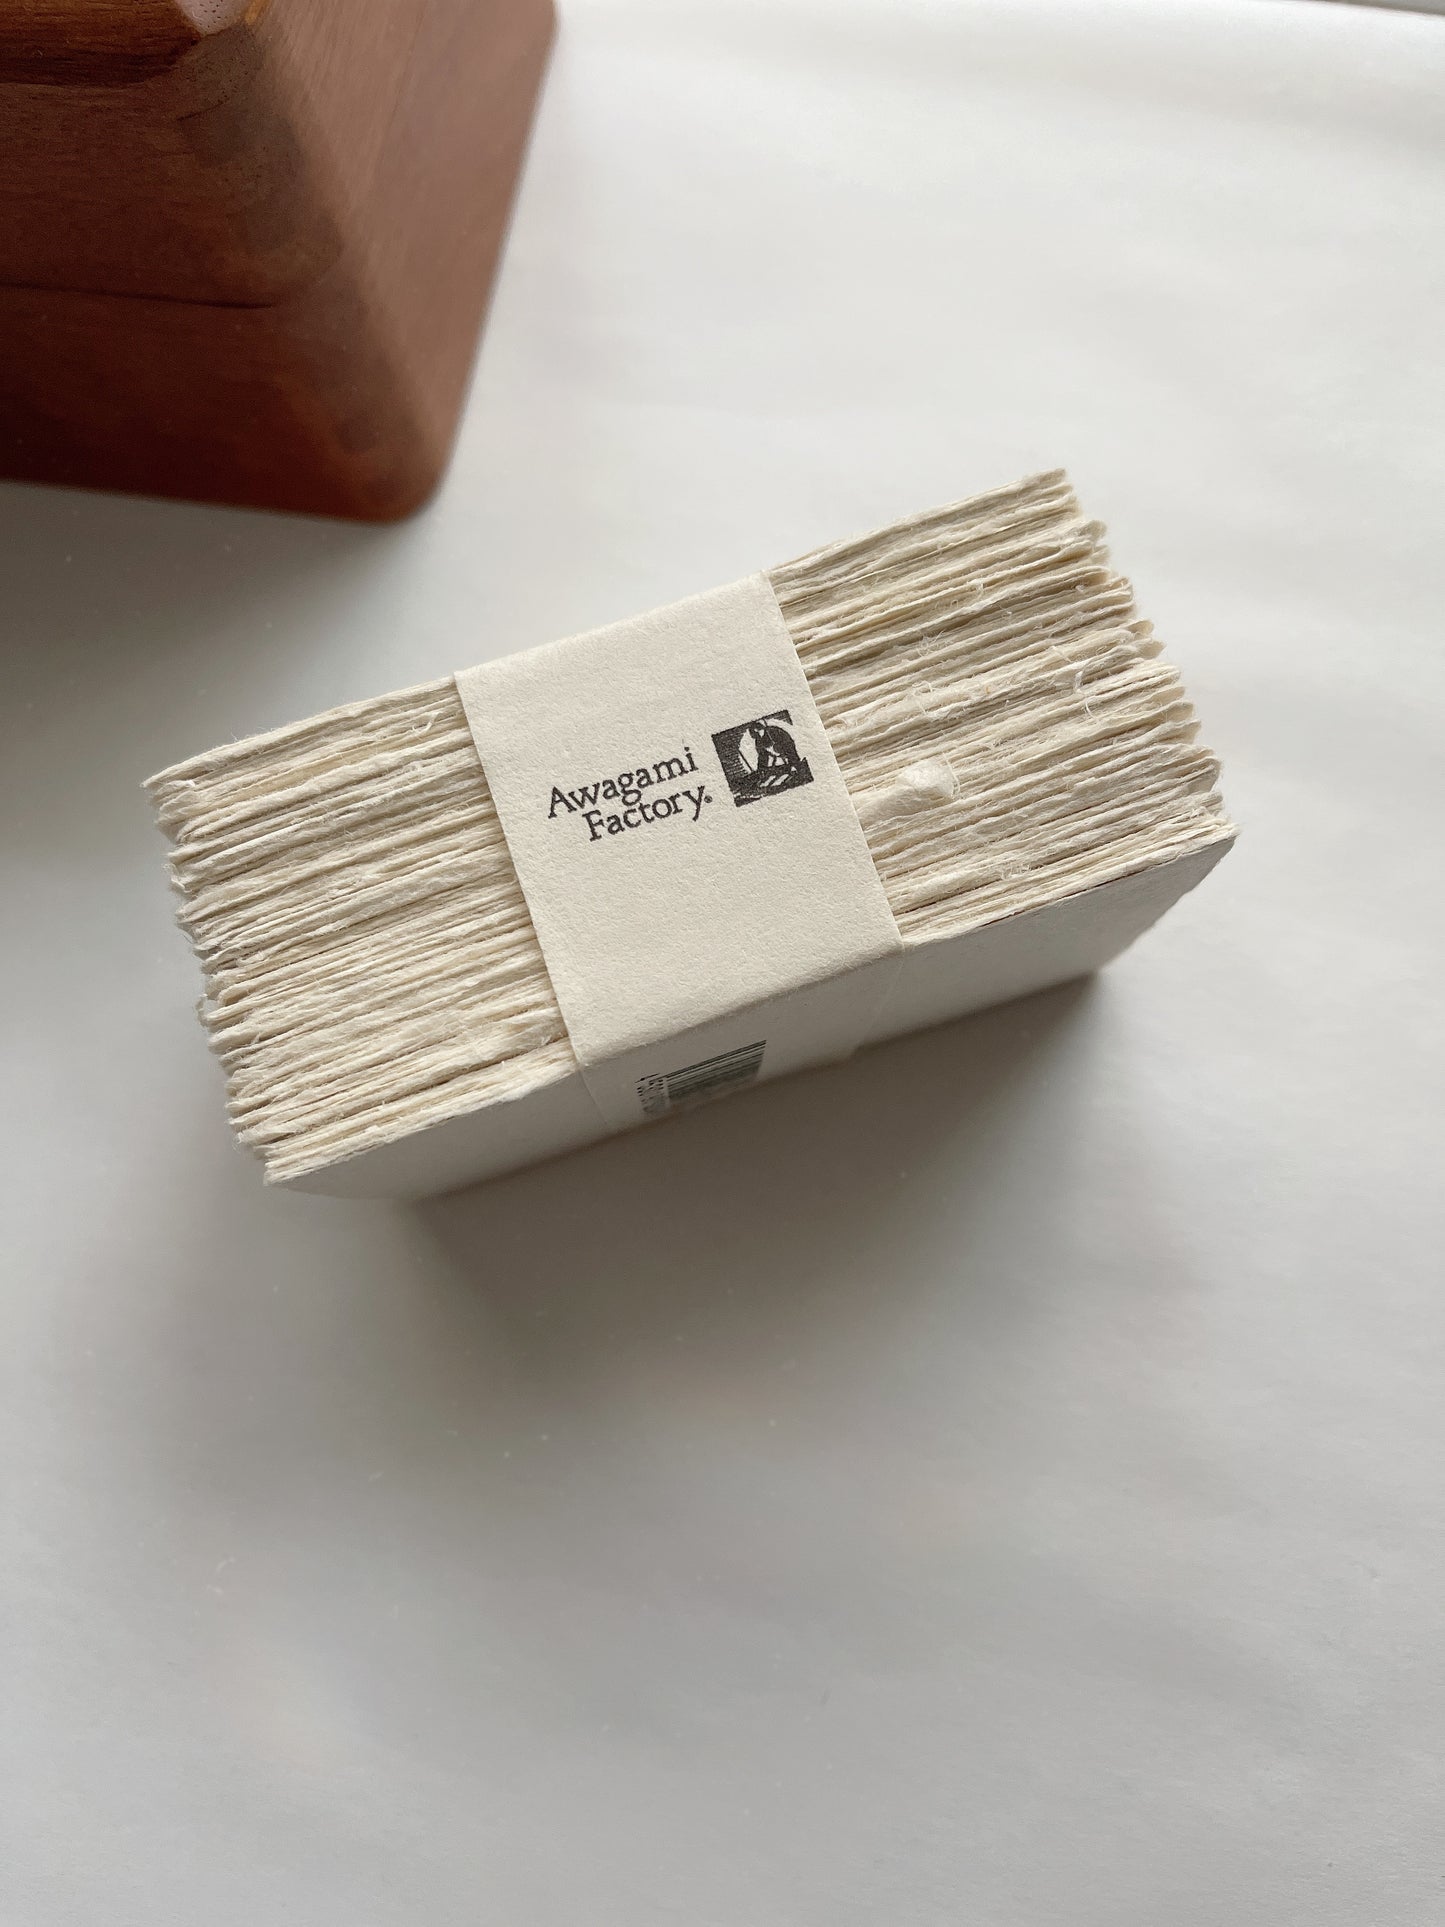 Awagami Factory Handmade Paper | Soft Cream White